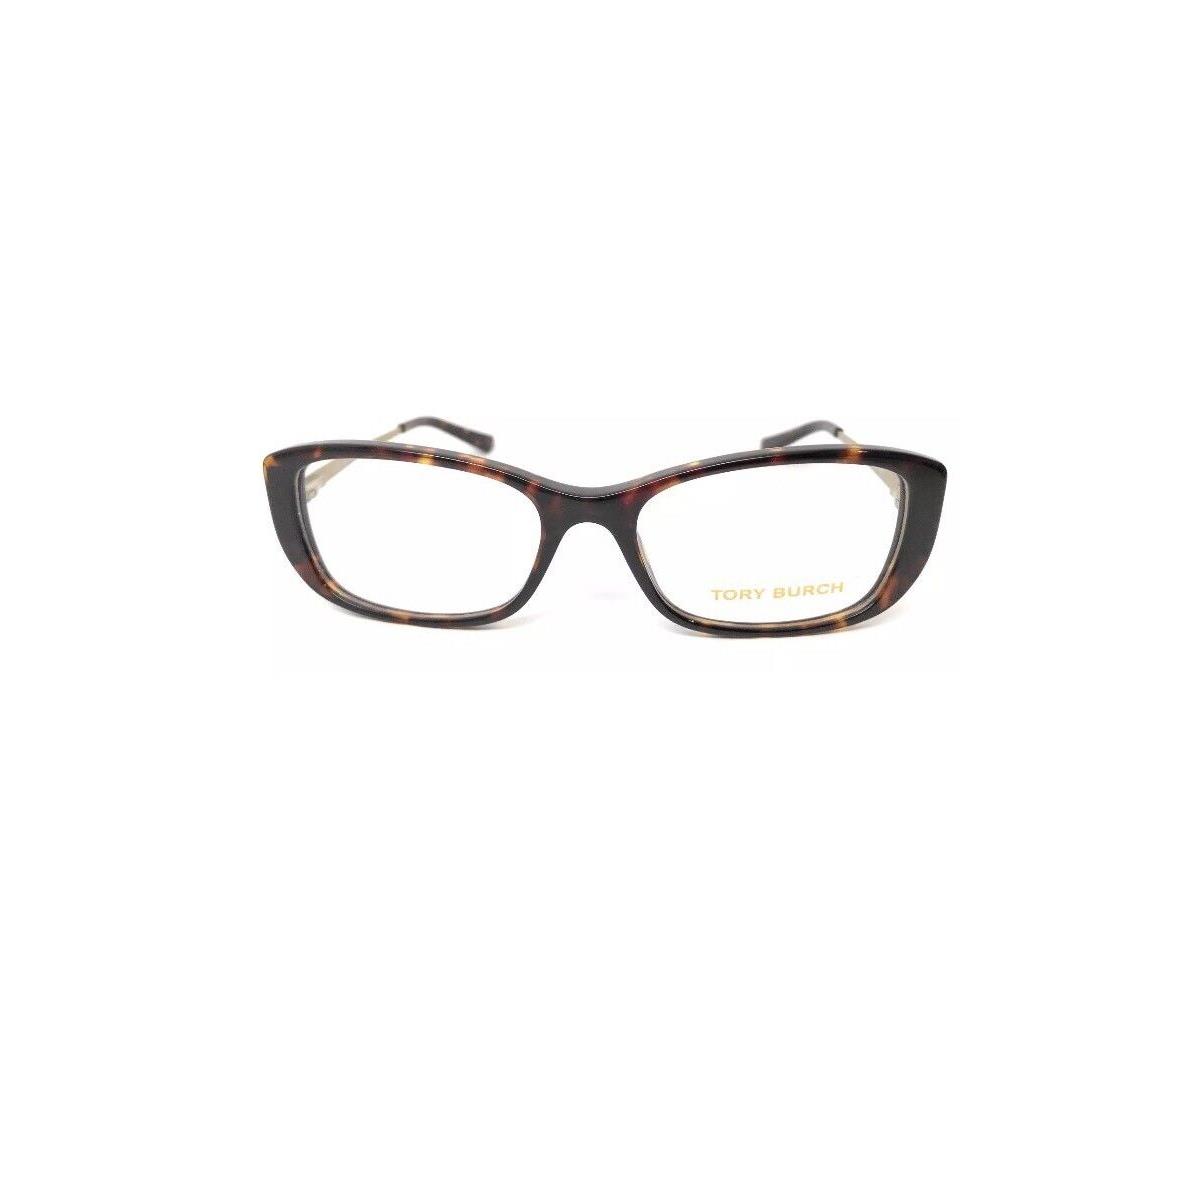 Tory Burch TY 2062 Col 1033 51/16 135 MM RX Eyeglasses - 1033, Frame: 1033